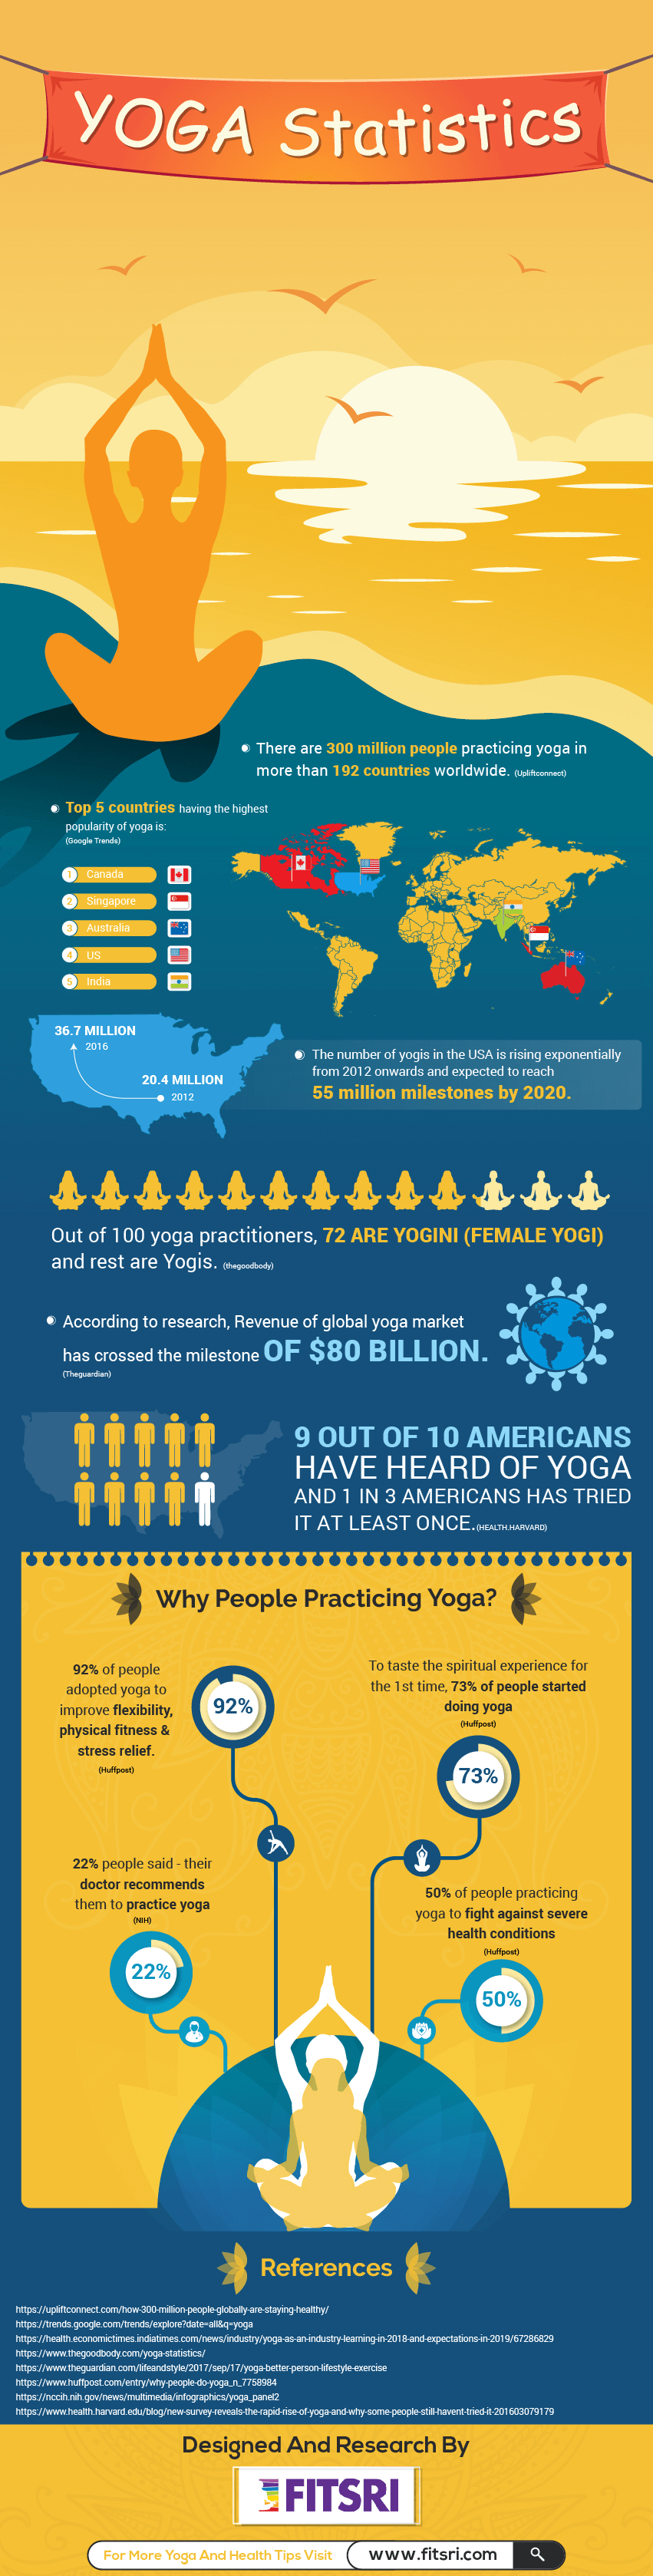 Yoga statistics